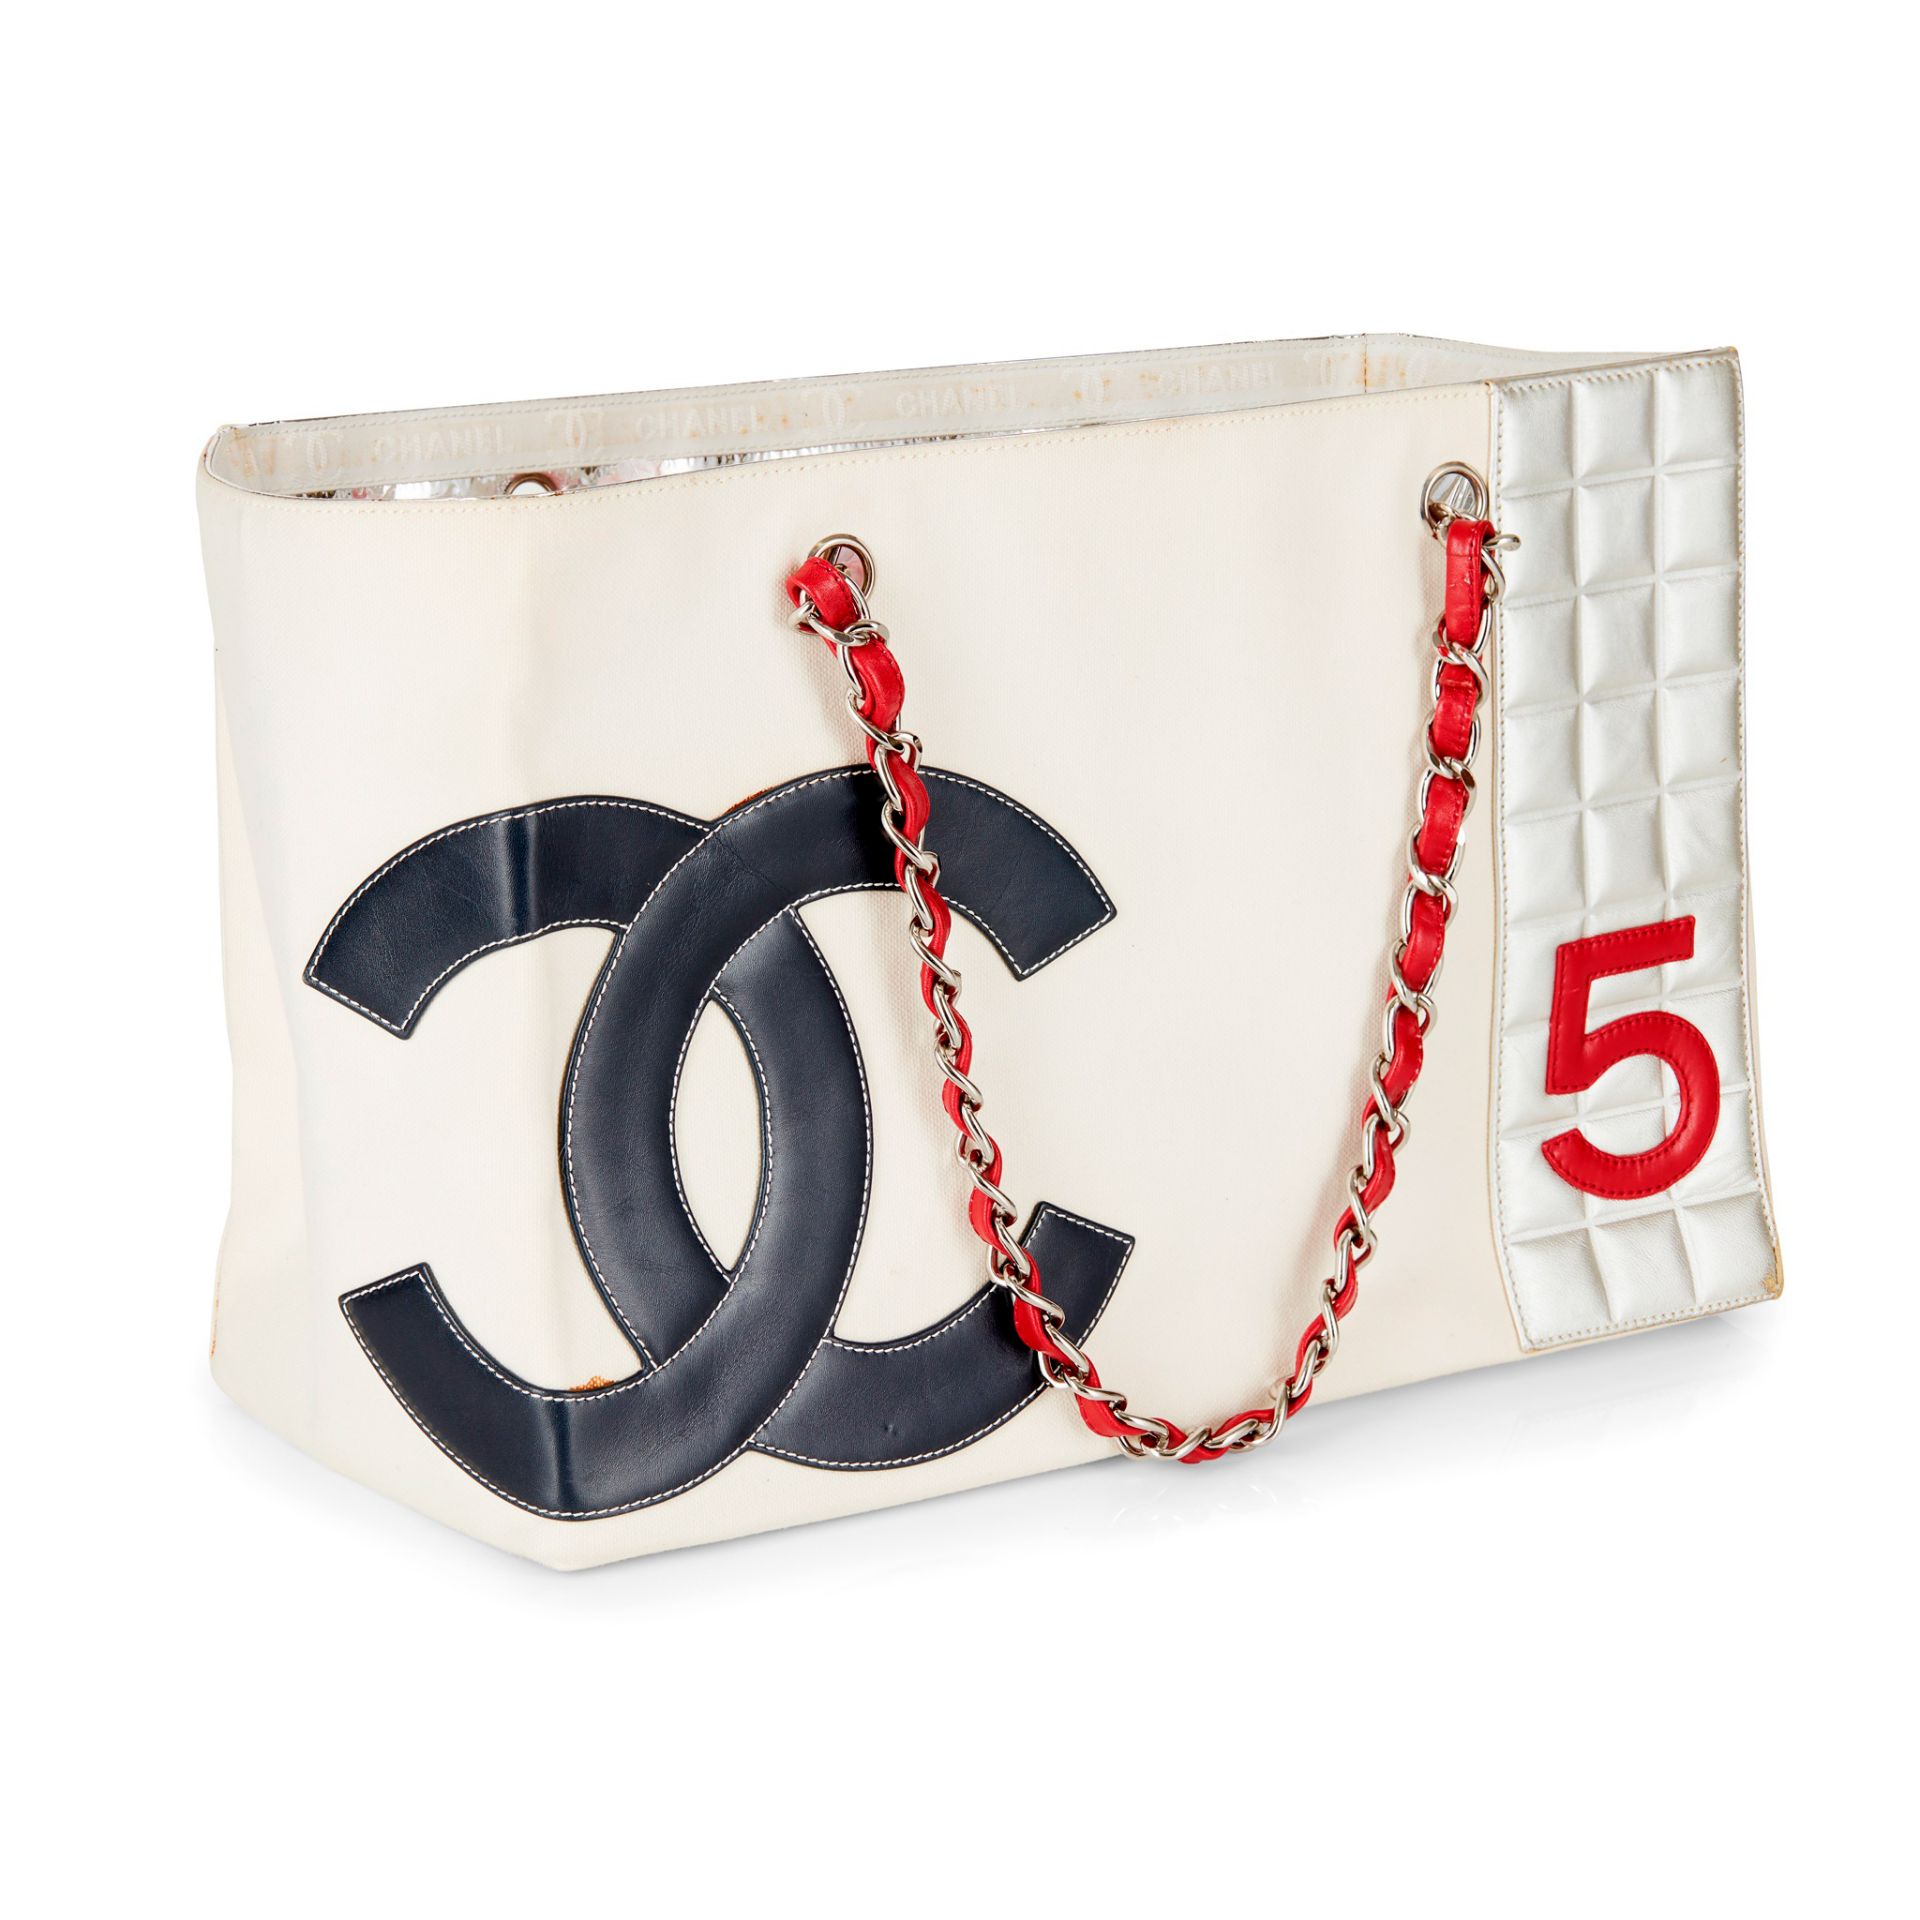 A 'No 5' front logo tote bag, Chanel